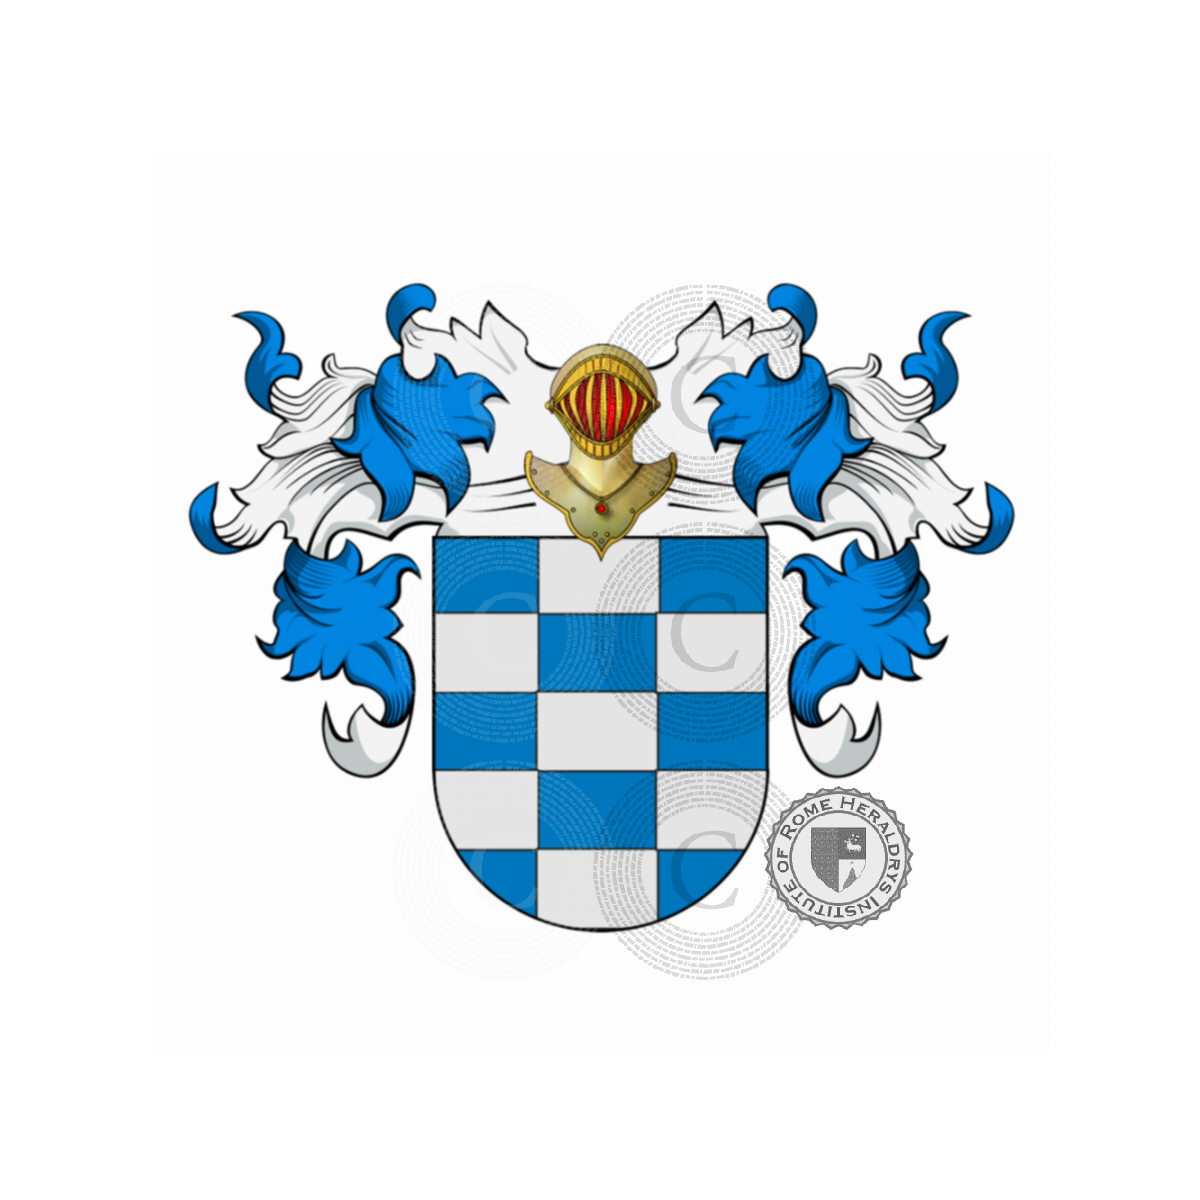 Wappen der FamilieToledo